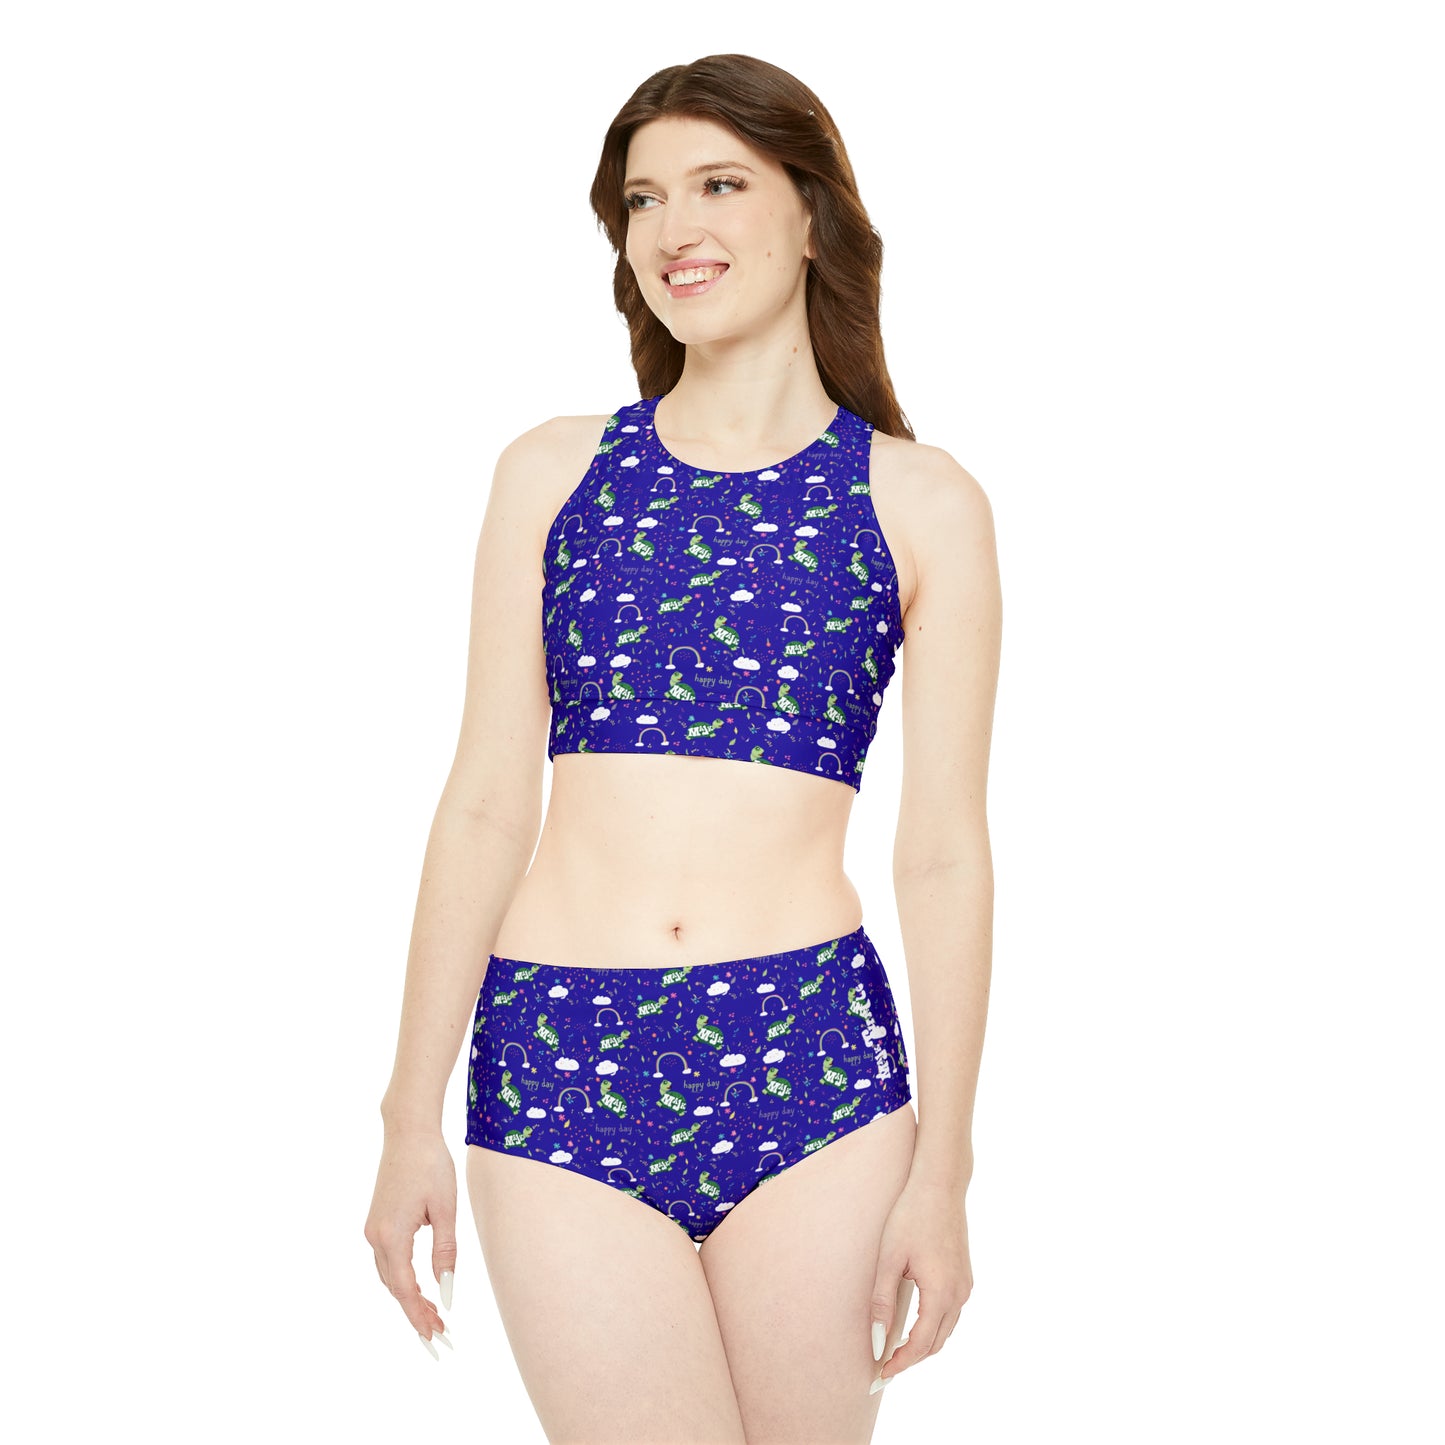 Youth/ Women's Sporty 2 piece Bikini Swimsuit set "Happy Days Collection"